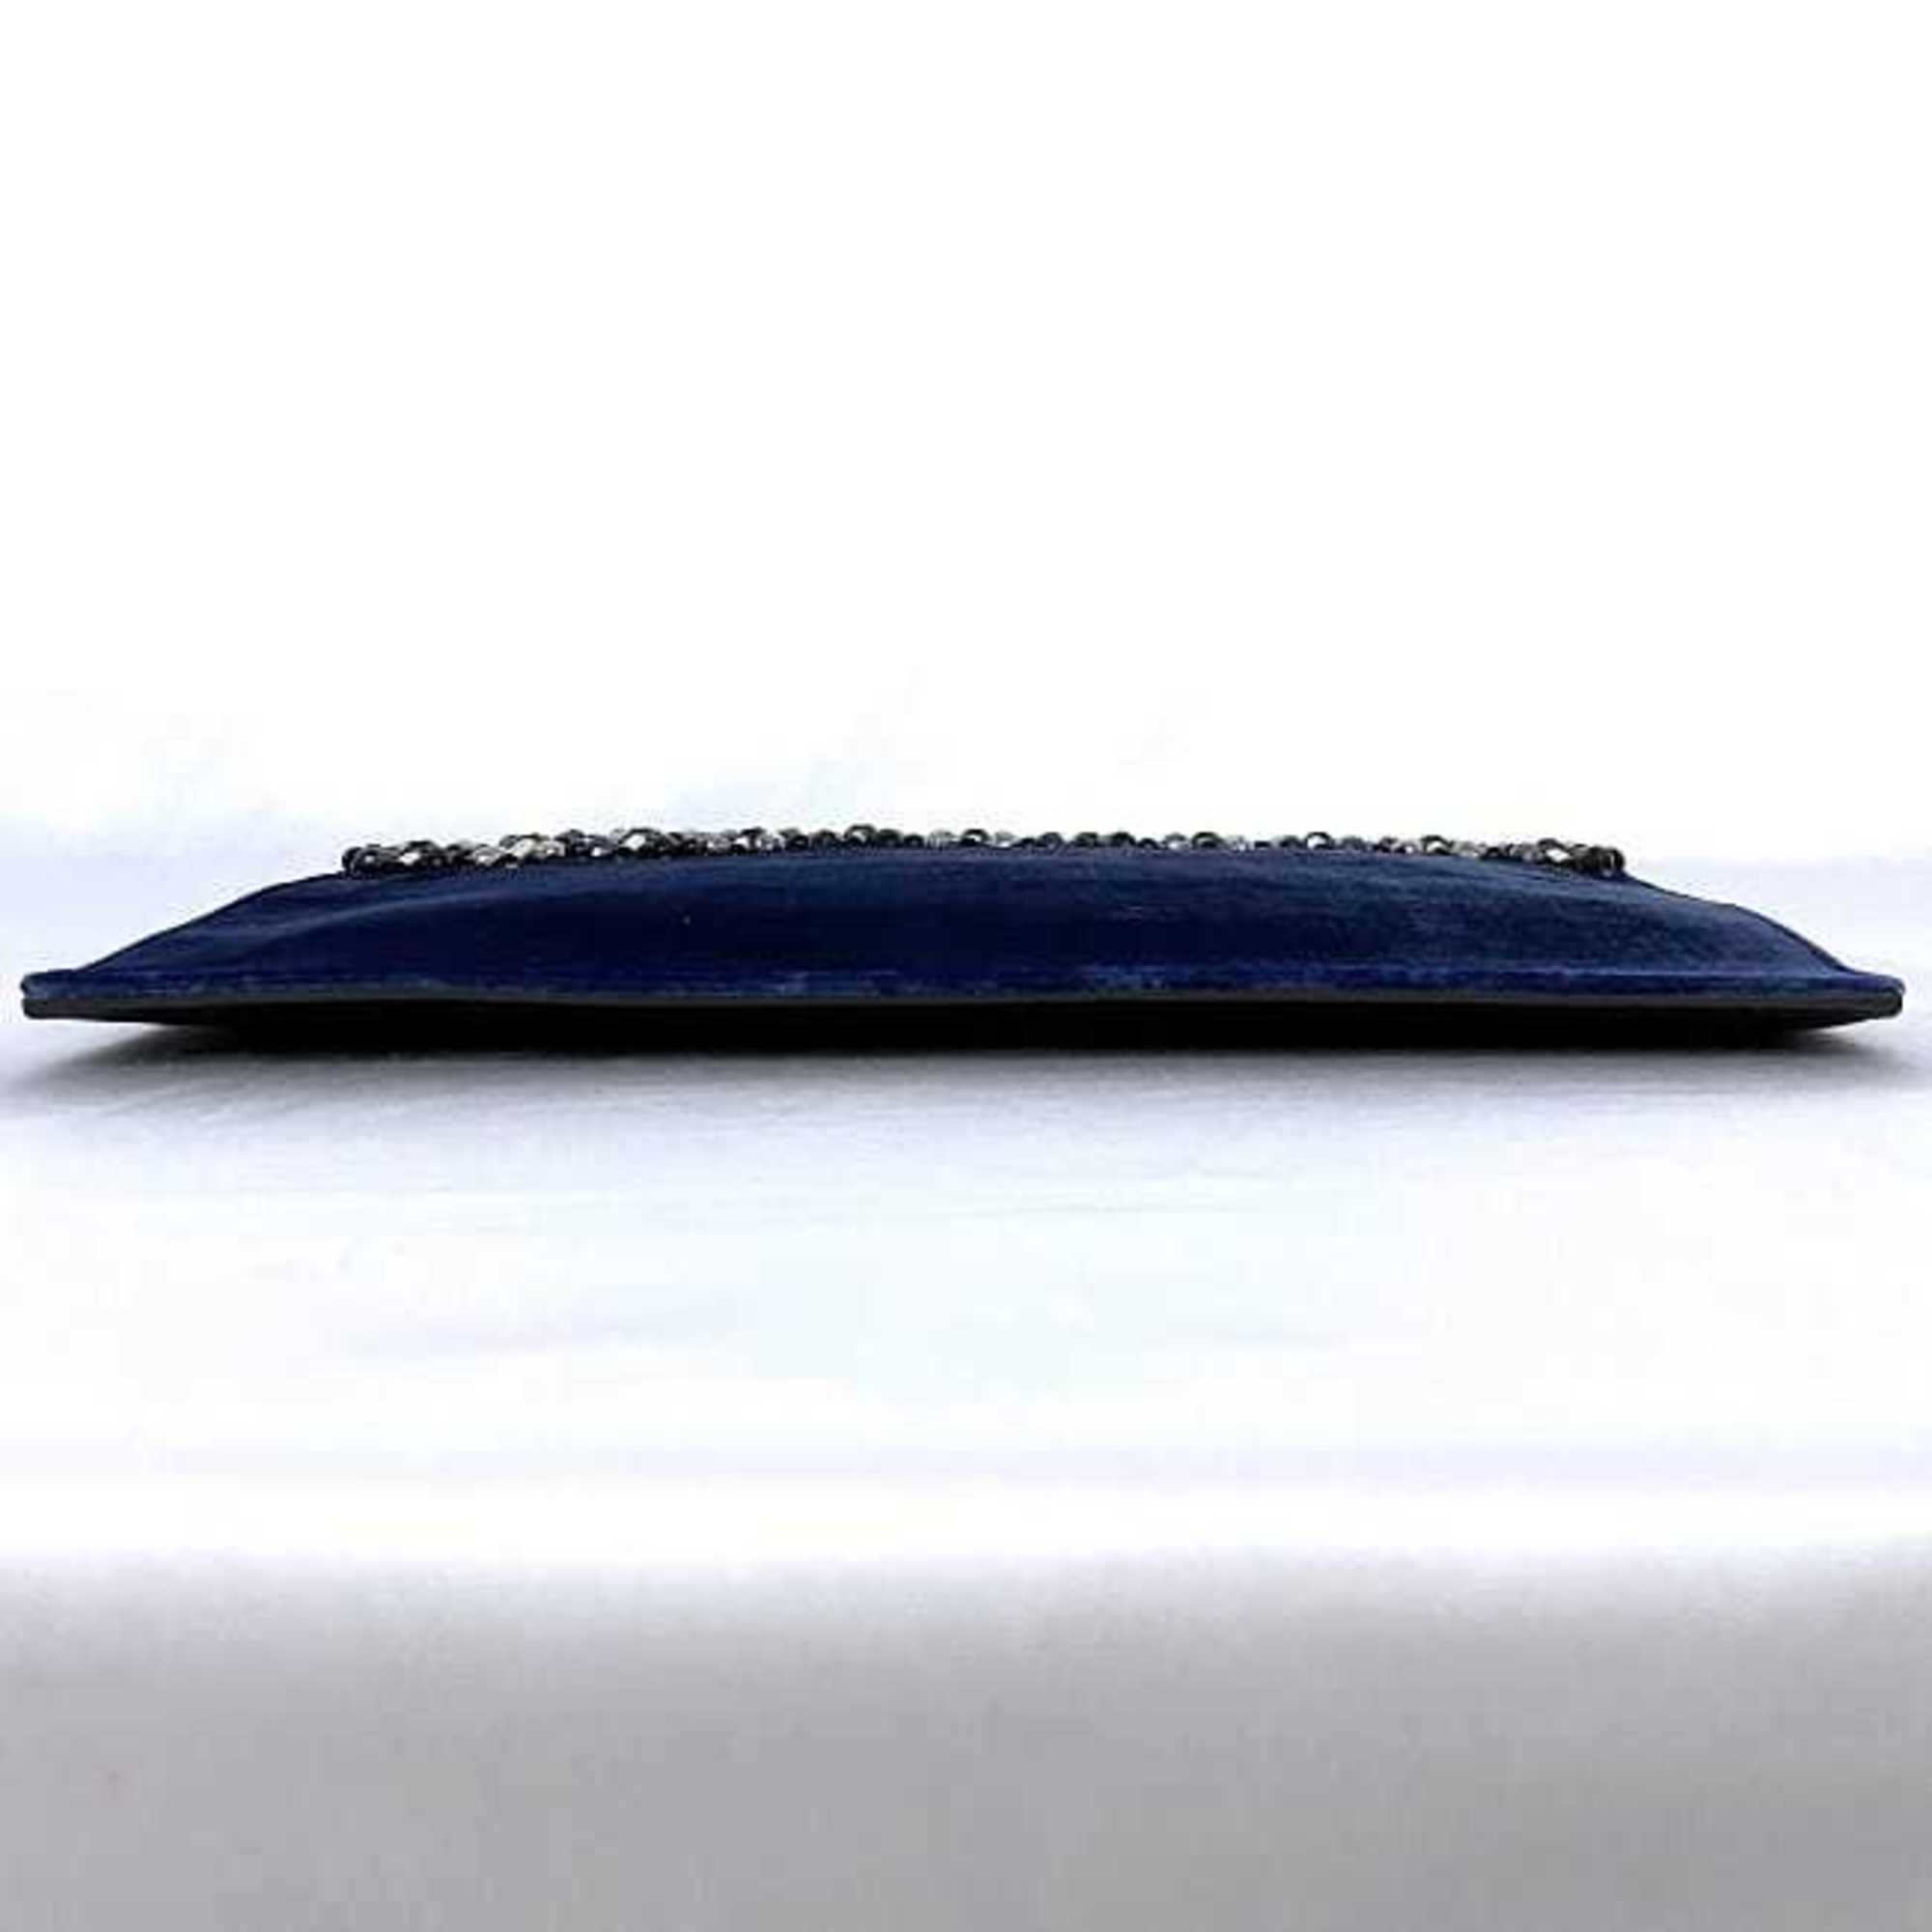 Marni Clutch Bag Blue Black ec-20313 Beads Pouch Velvet Leather Rhinestone MARNI Stones Women's